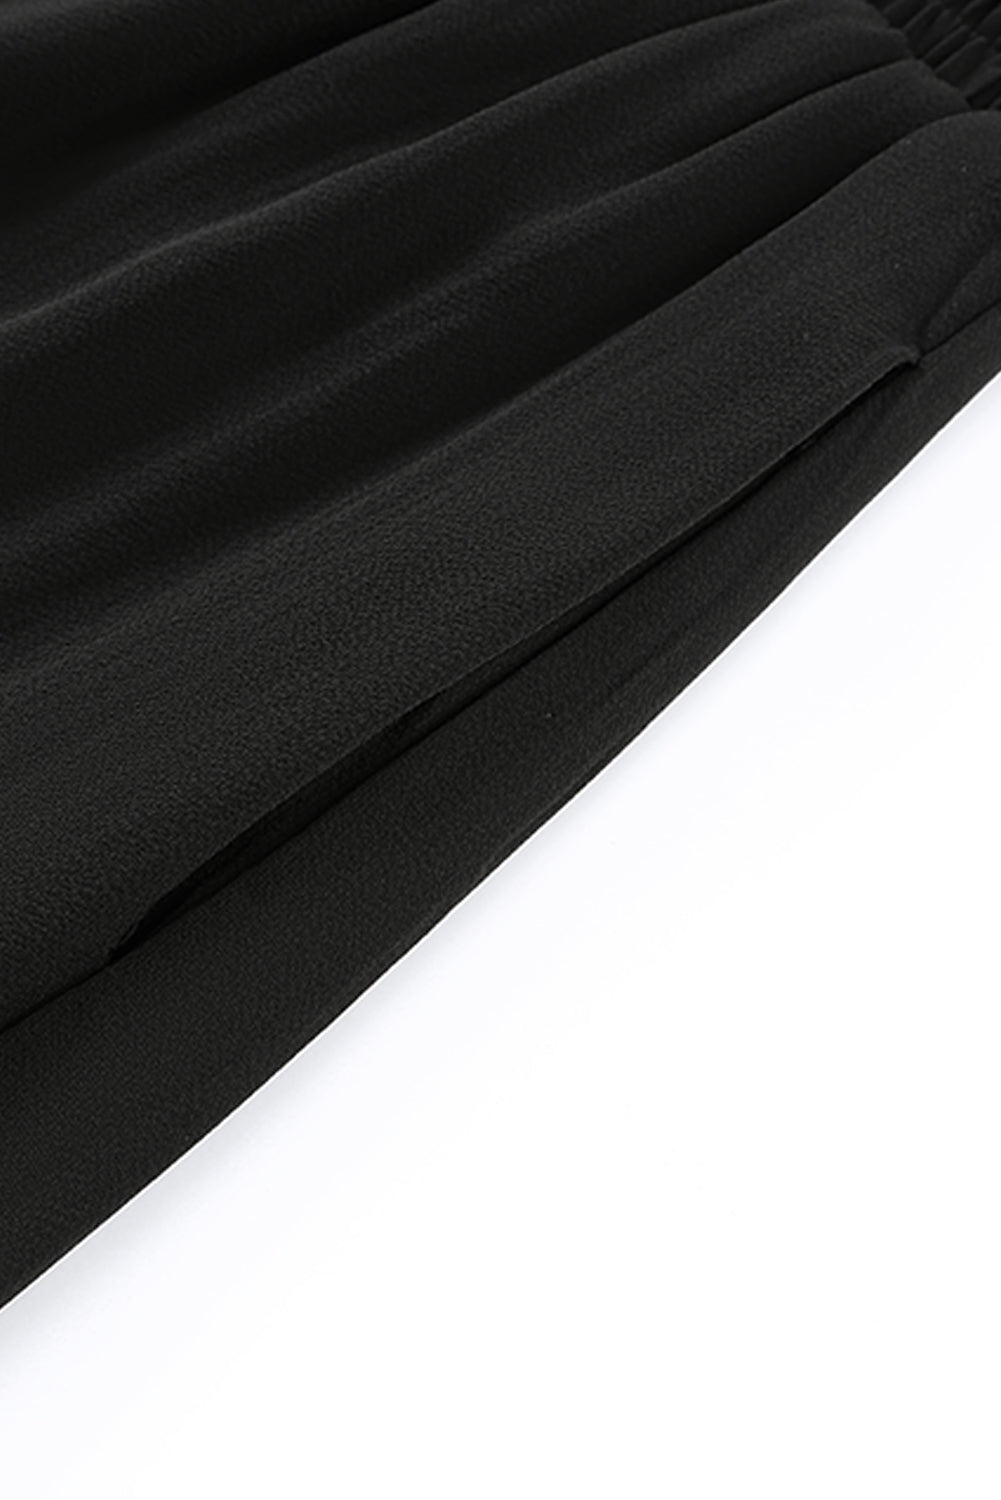 Black Frill Tiered Drawstring Waist Maxi Skirt